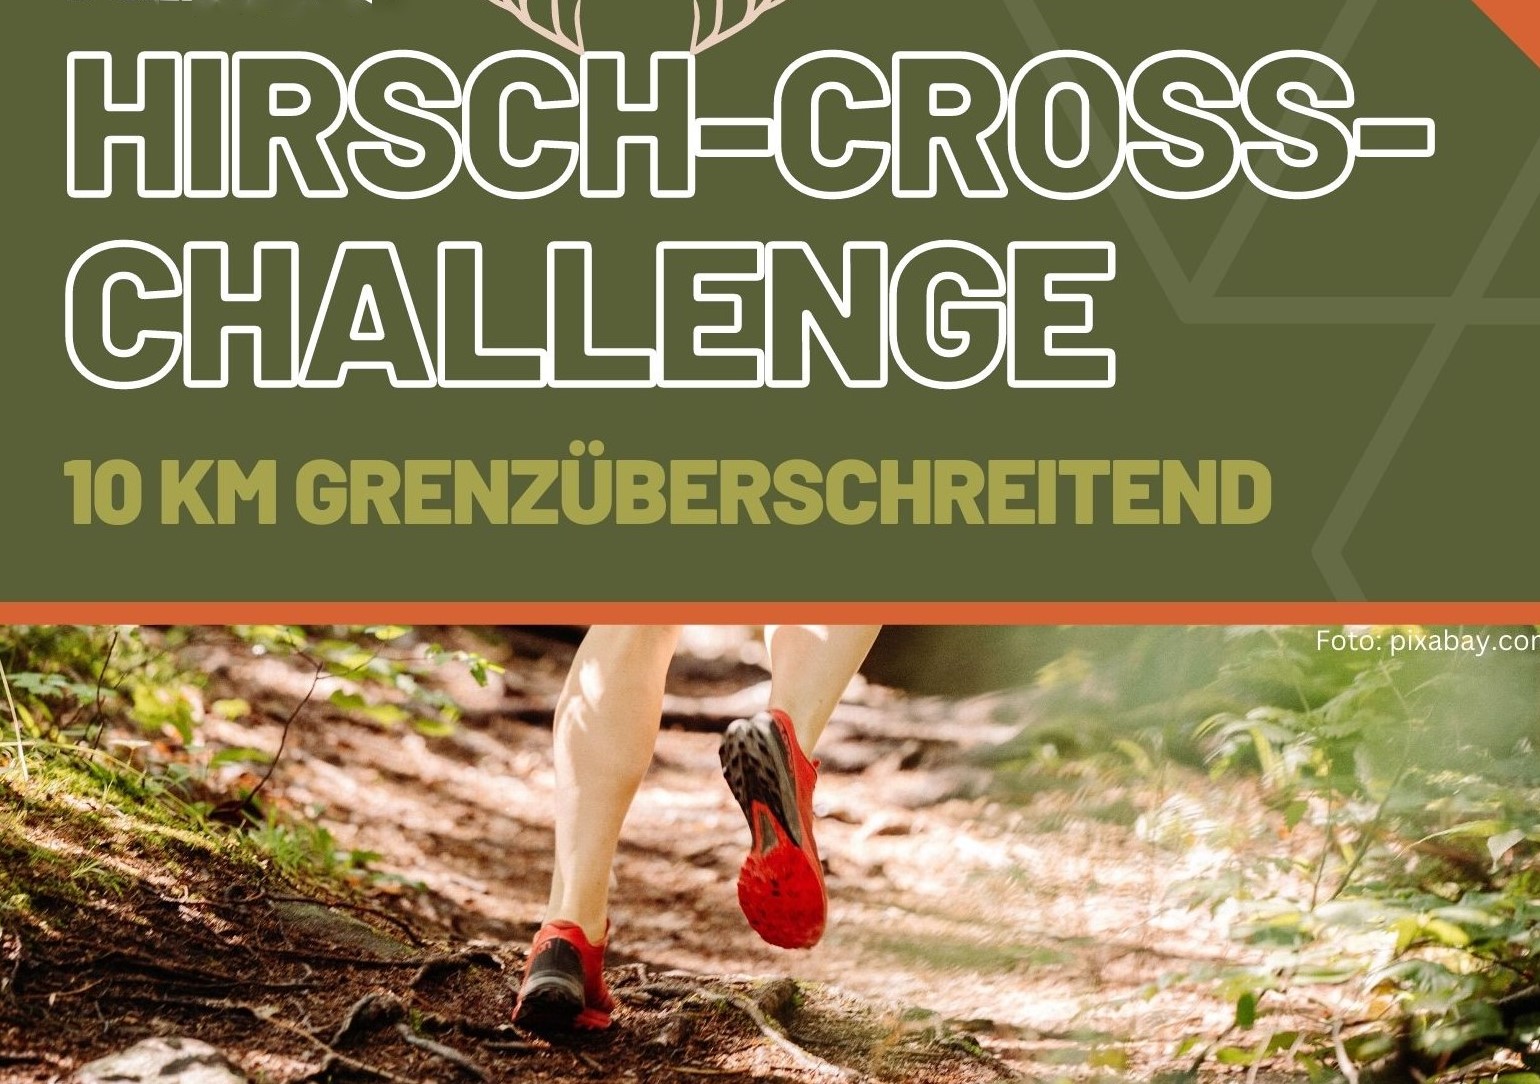 Hirschcross Challenge Symbolfoto